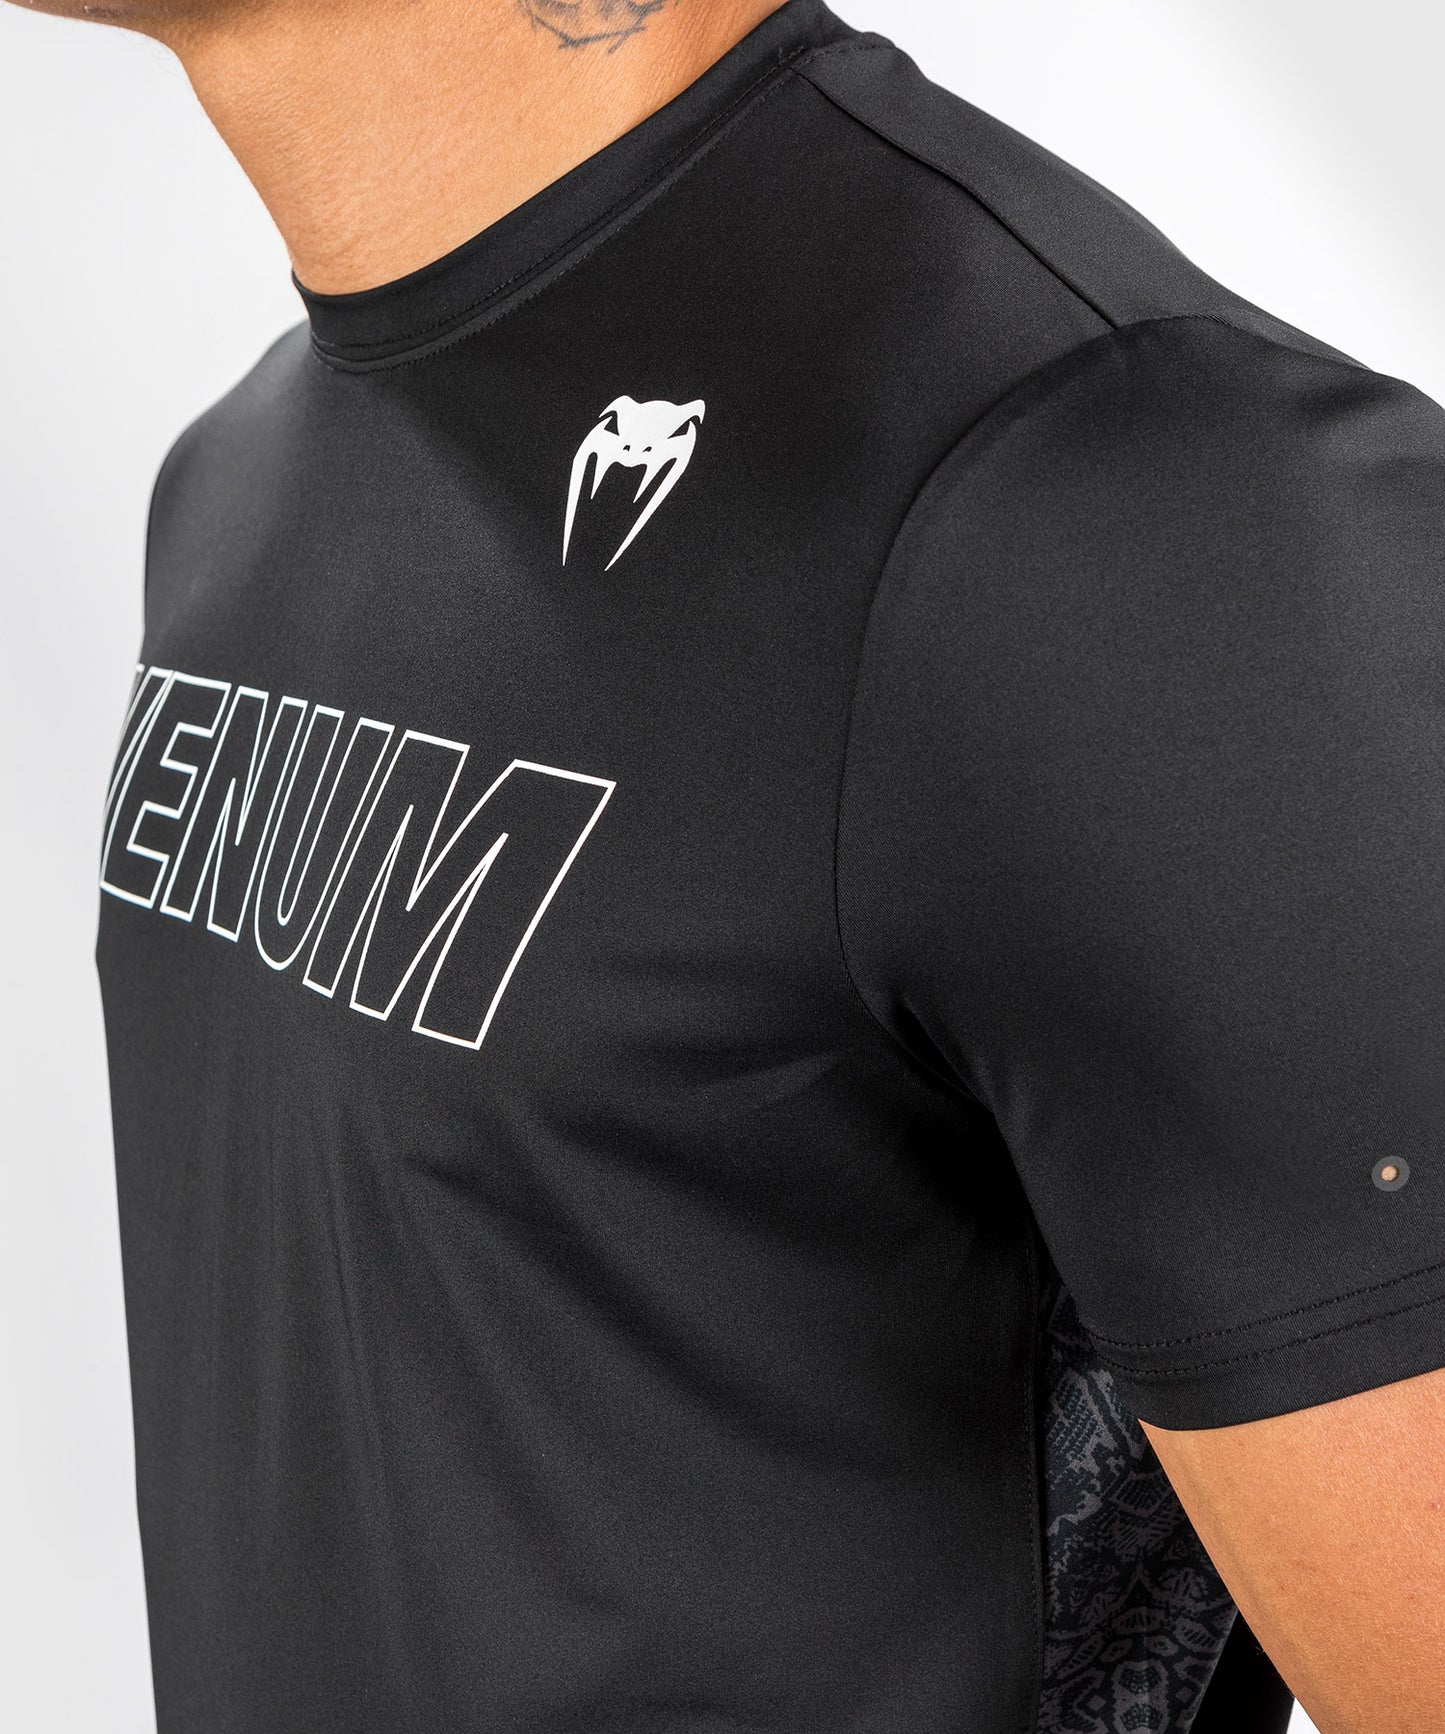 Venum Classic Evo Dry Tech T-Shirt - Black/White